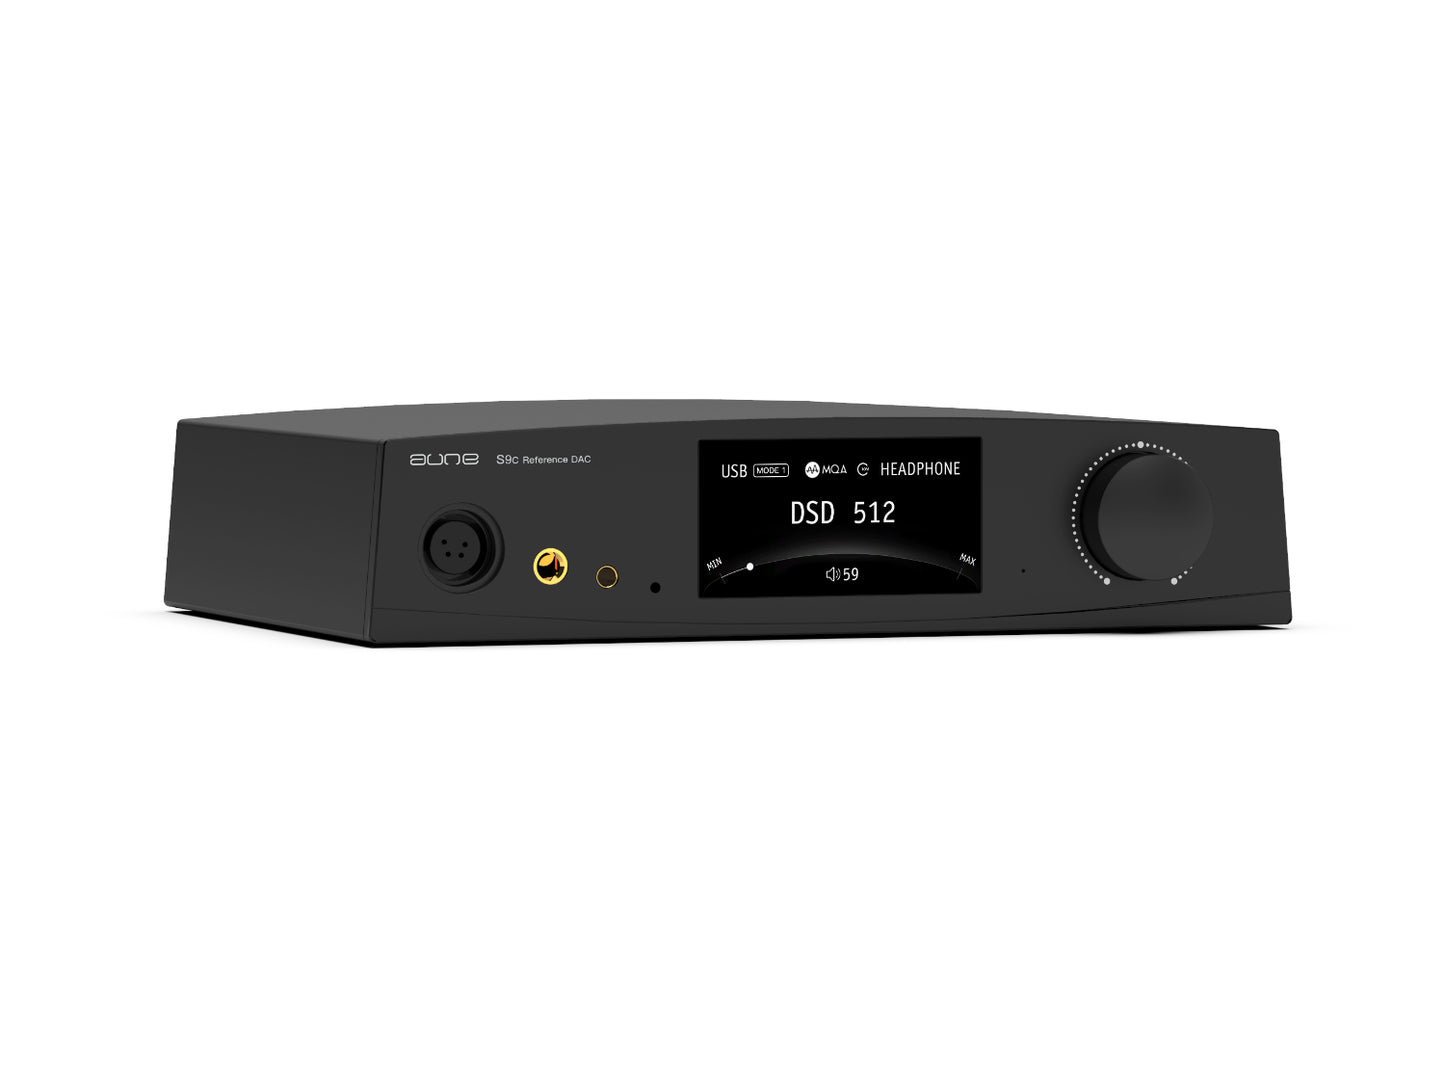 S9c Pro Reference DAC Headphone Amp BT Version